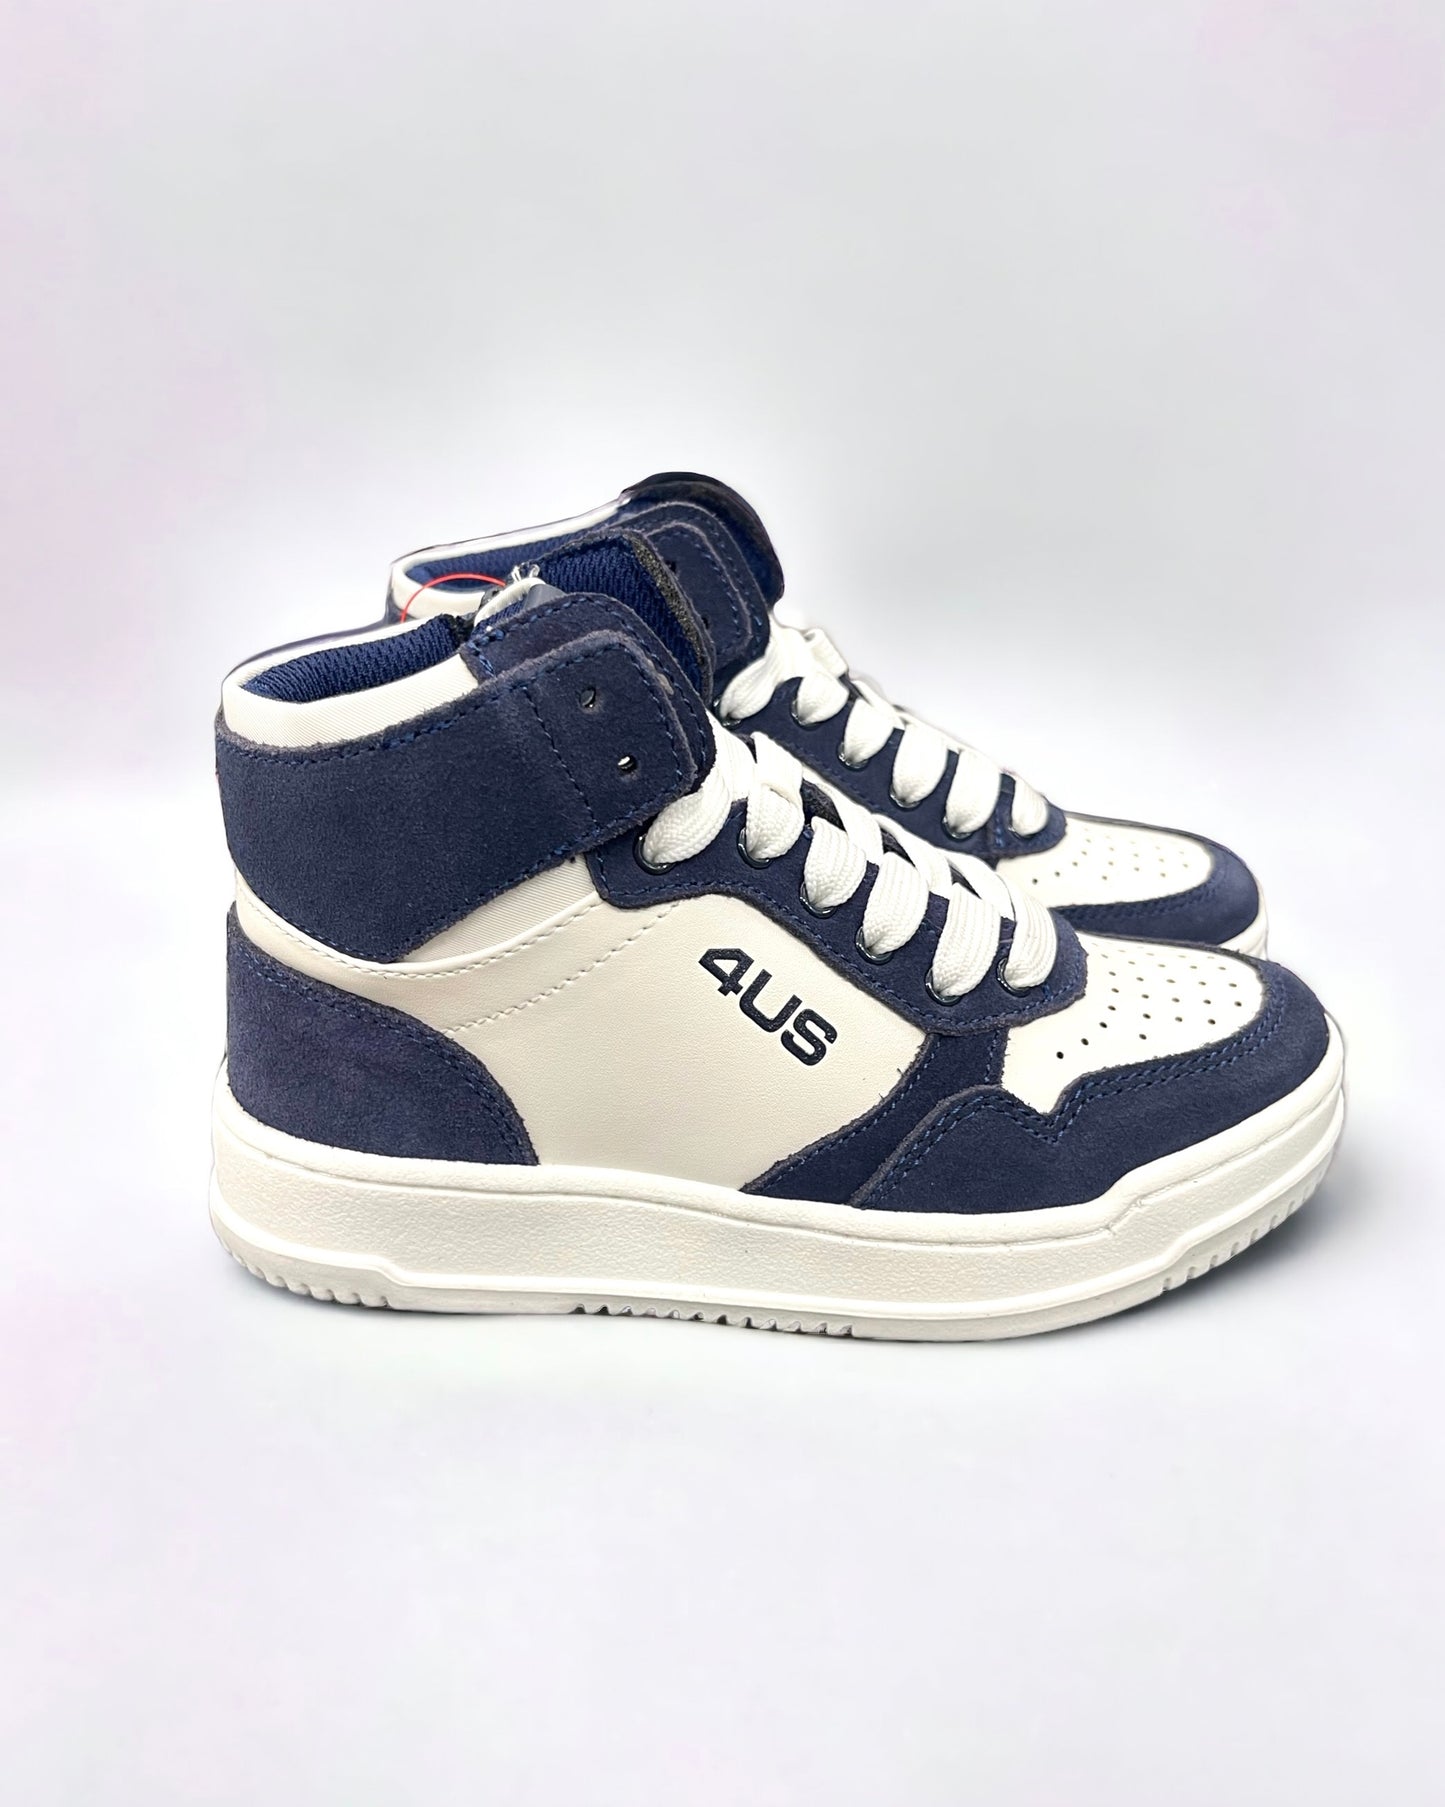 4US BY CESARE PACIOTTI - Sneaker alta blu e bianca